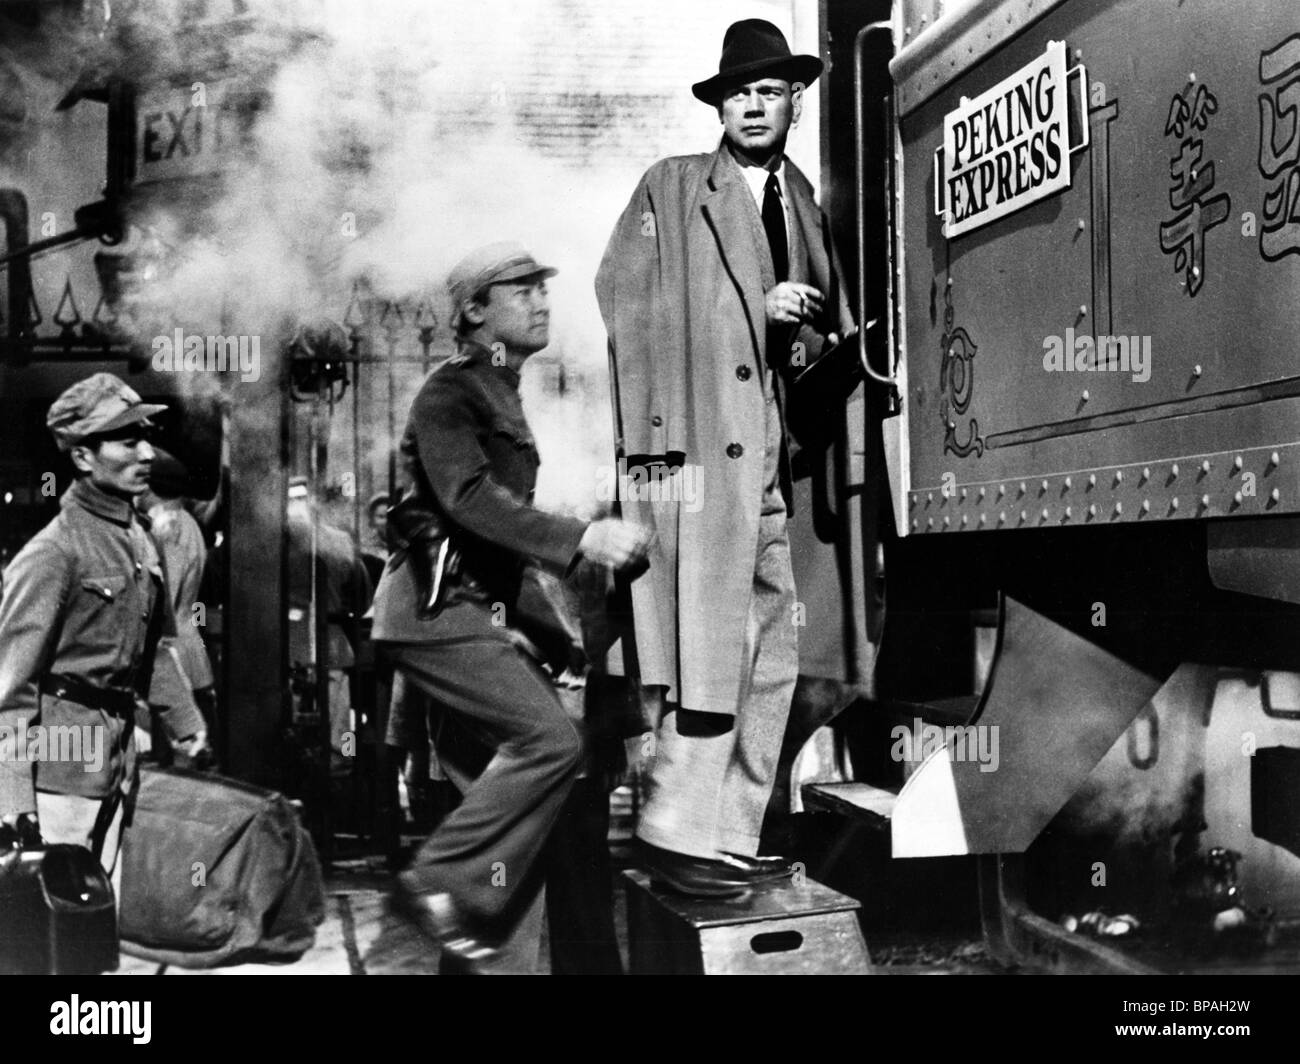 JOSEPH COTTEN PEKING EXPRESS (1951) Stock Photo